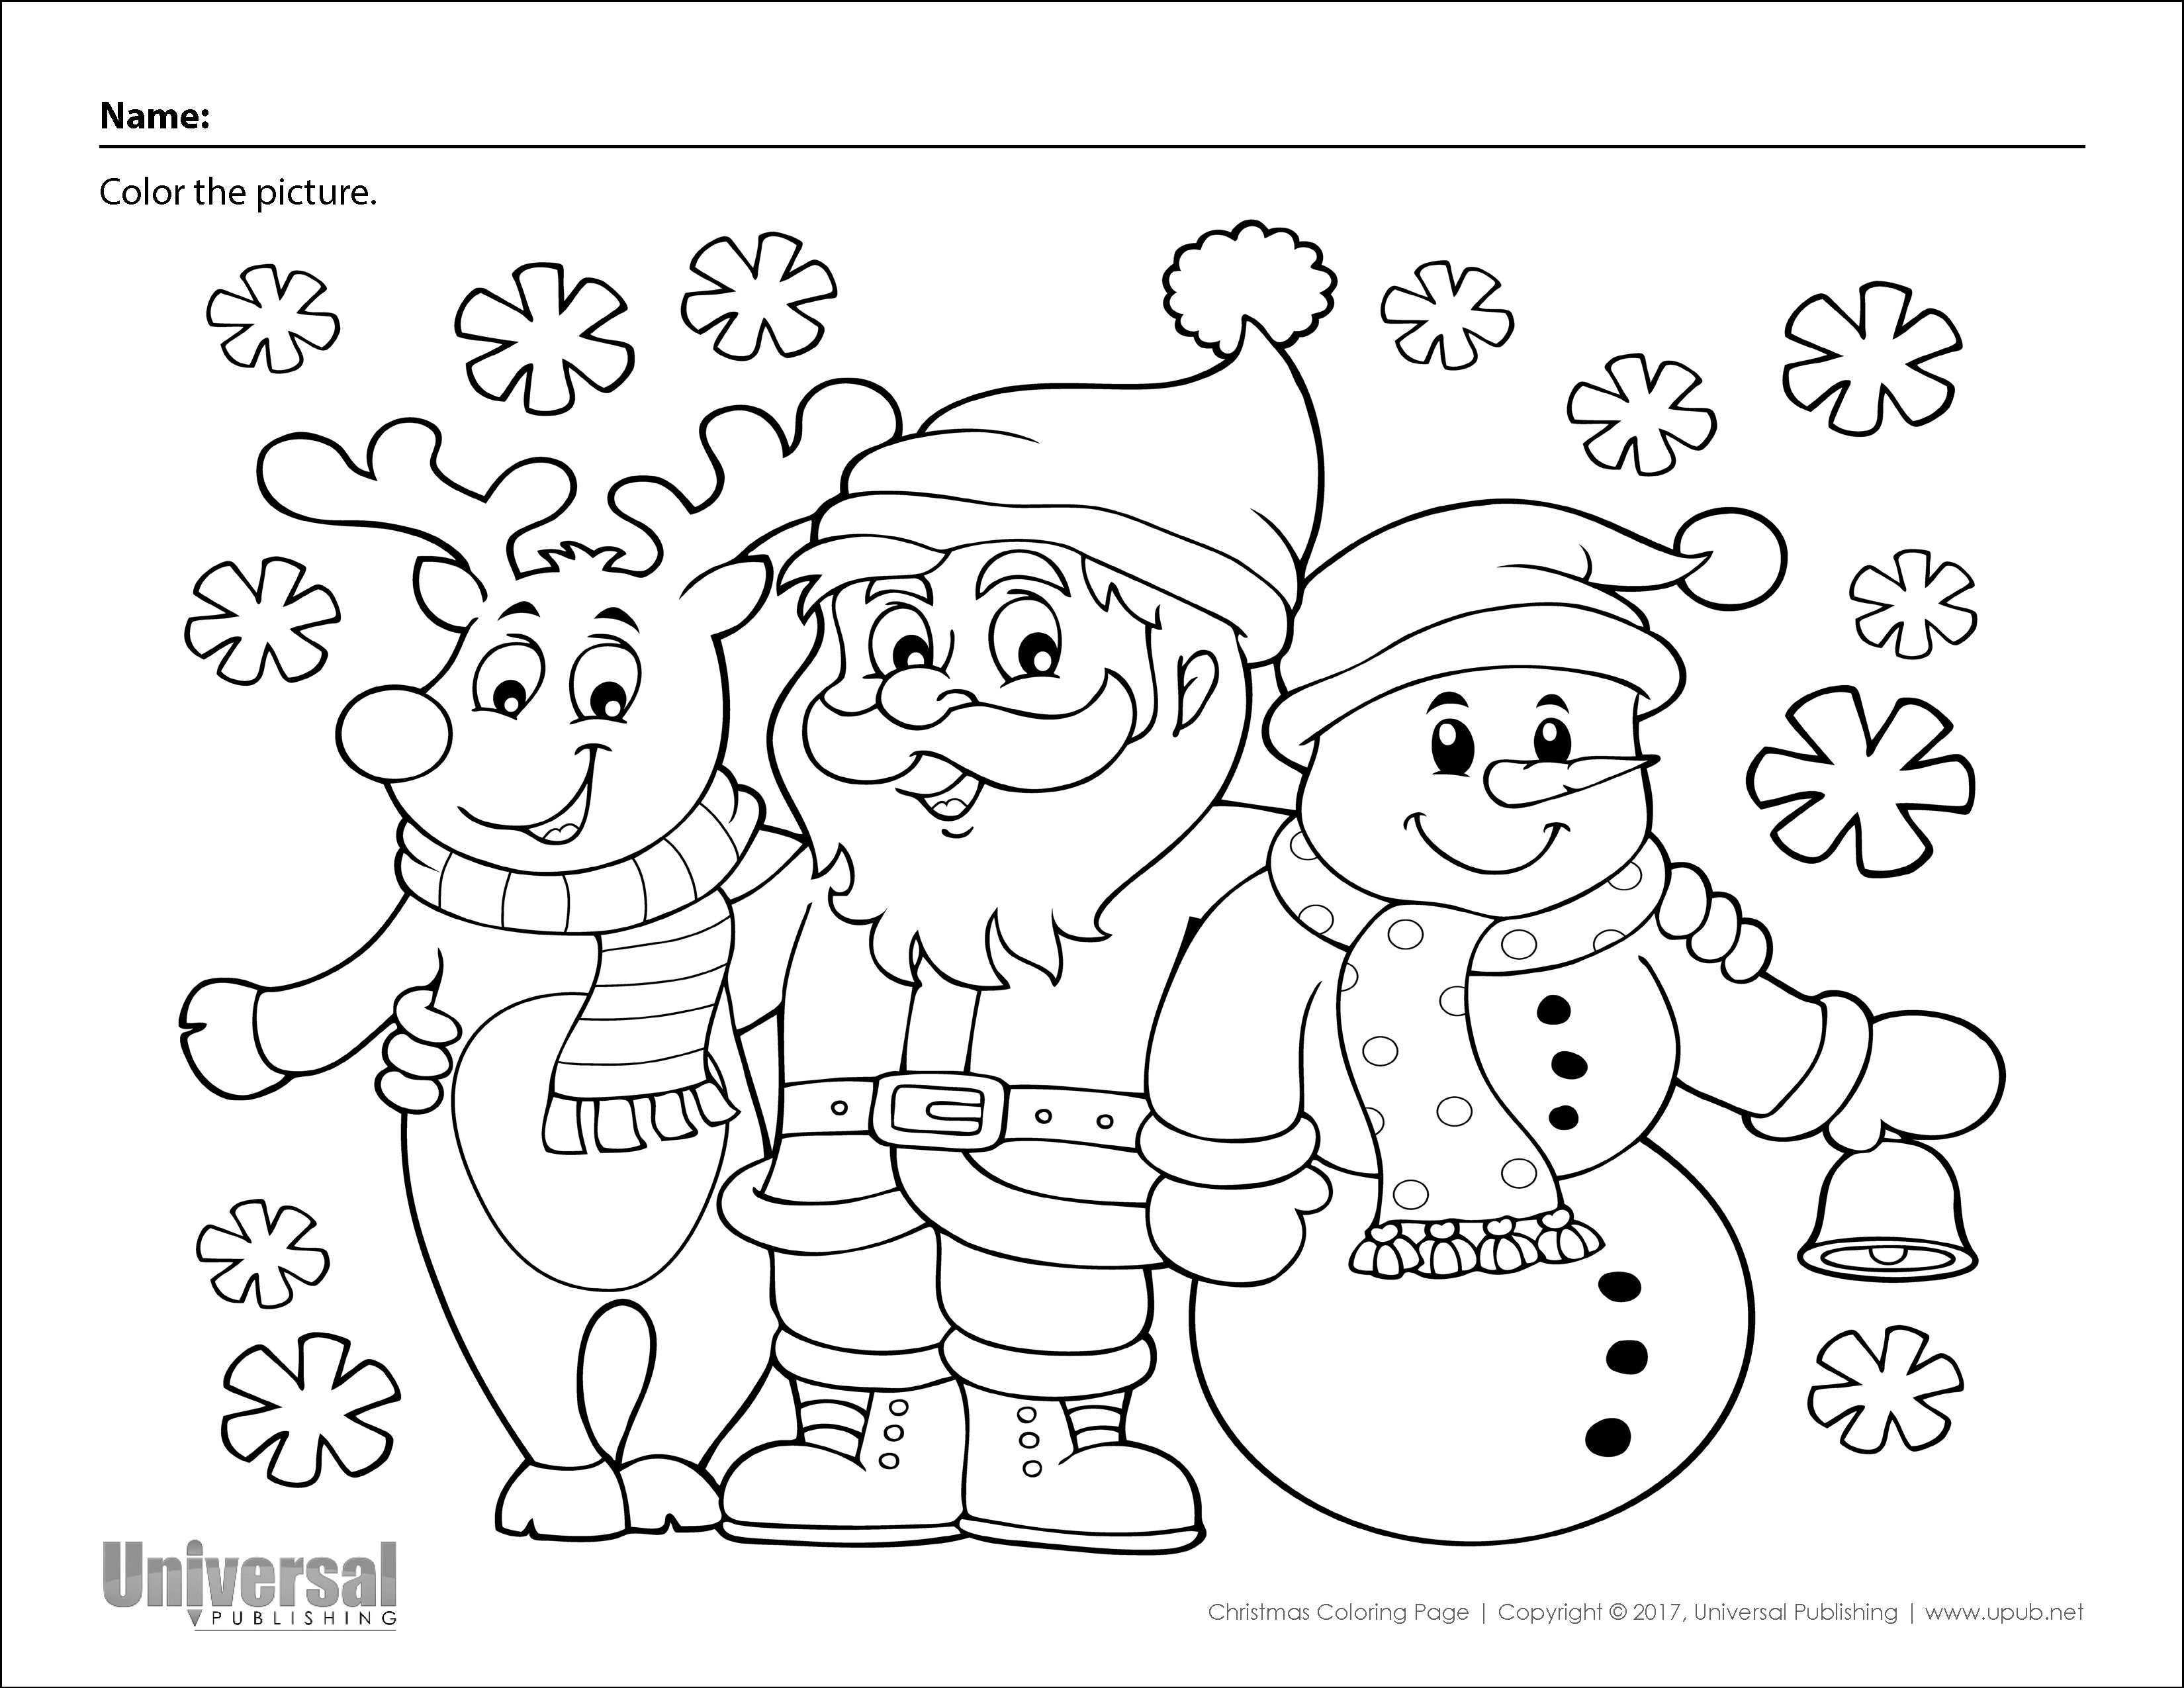 Christmas Activities | Free Printables - Universal Publishing Blog